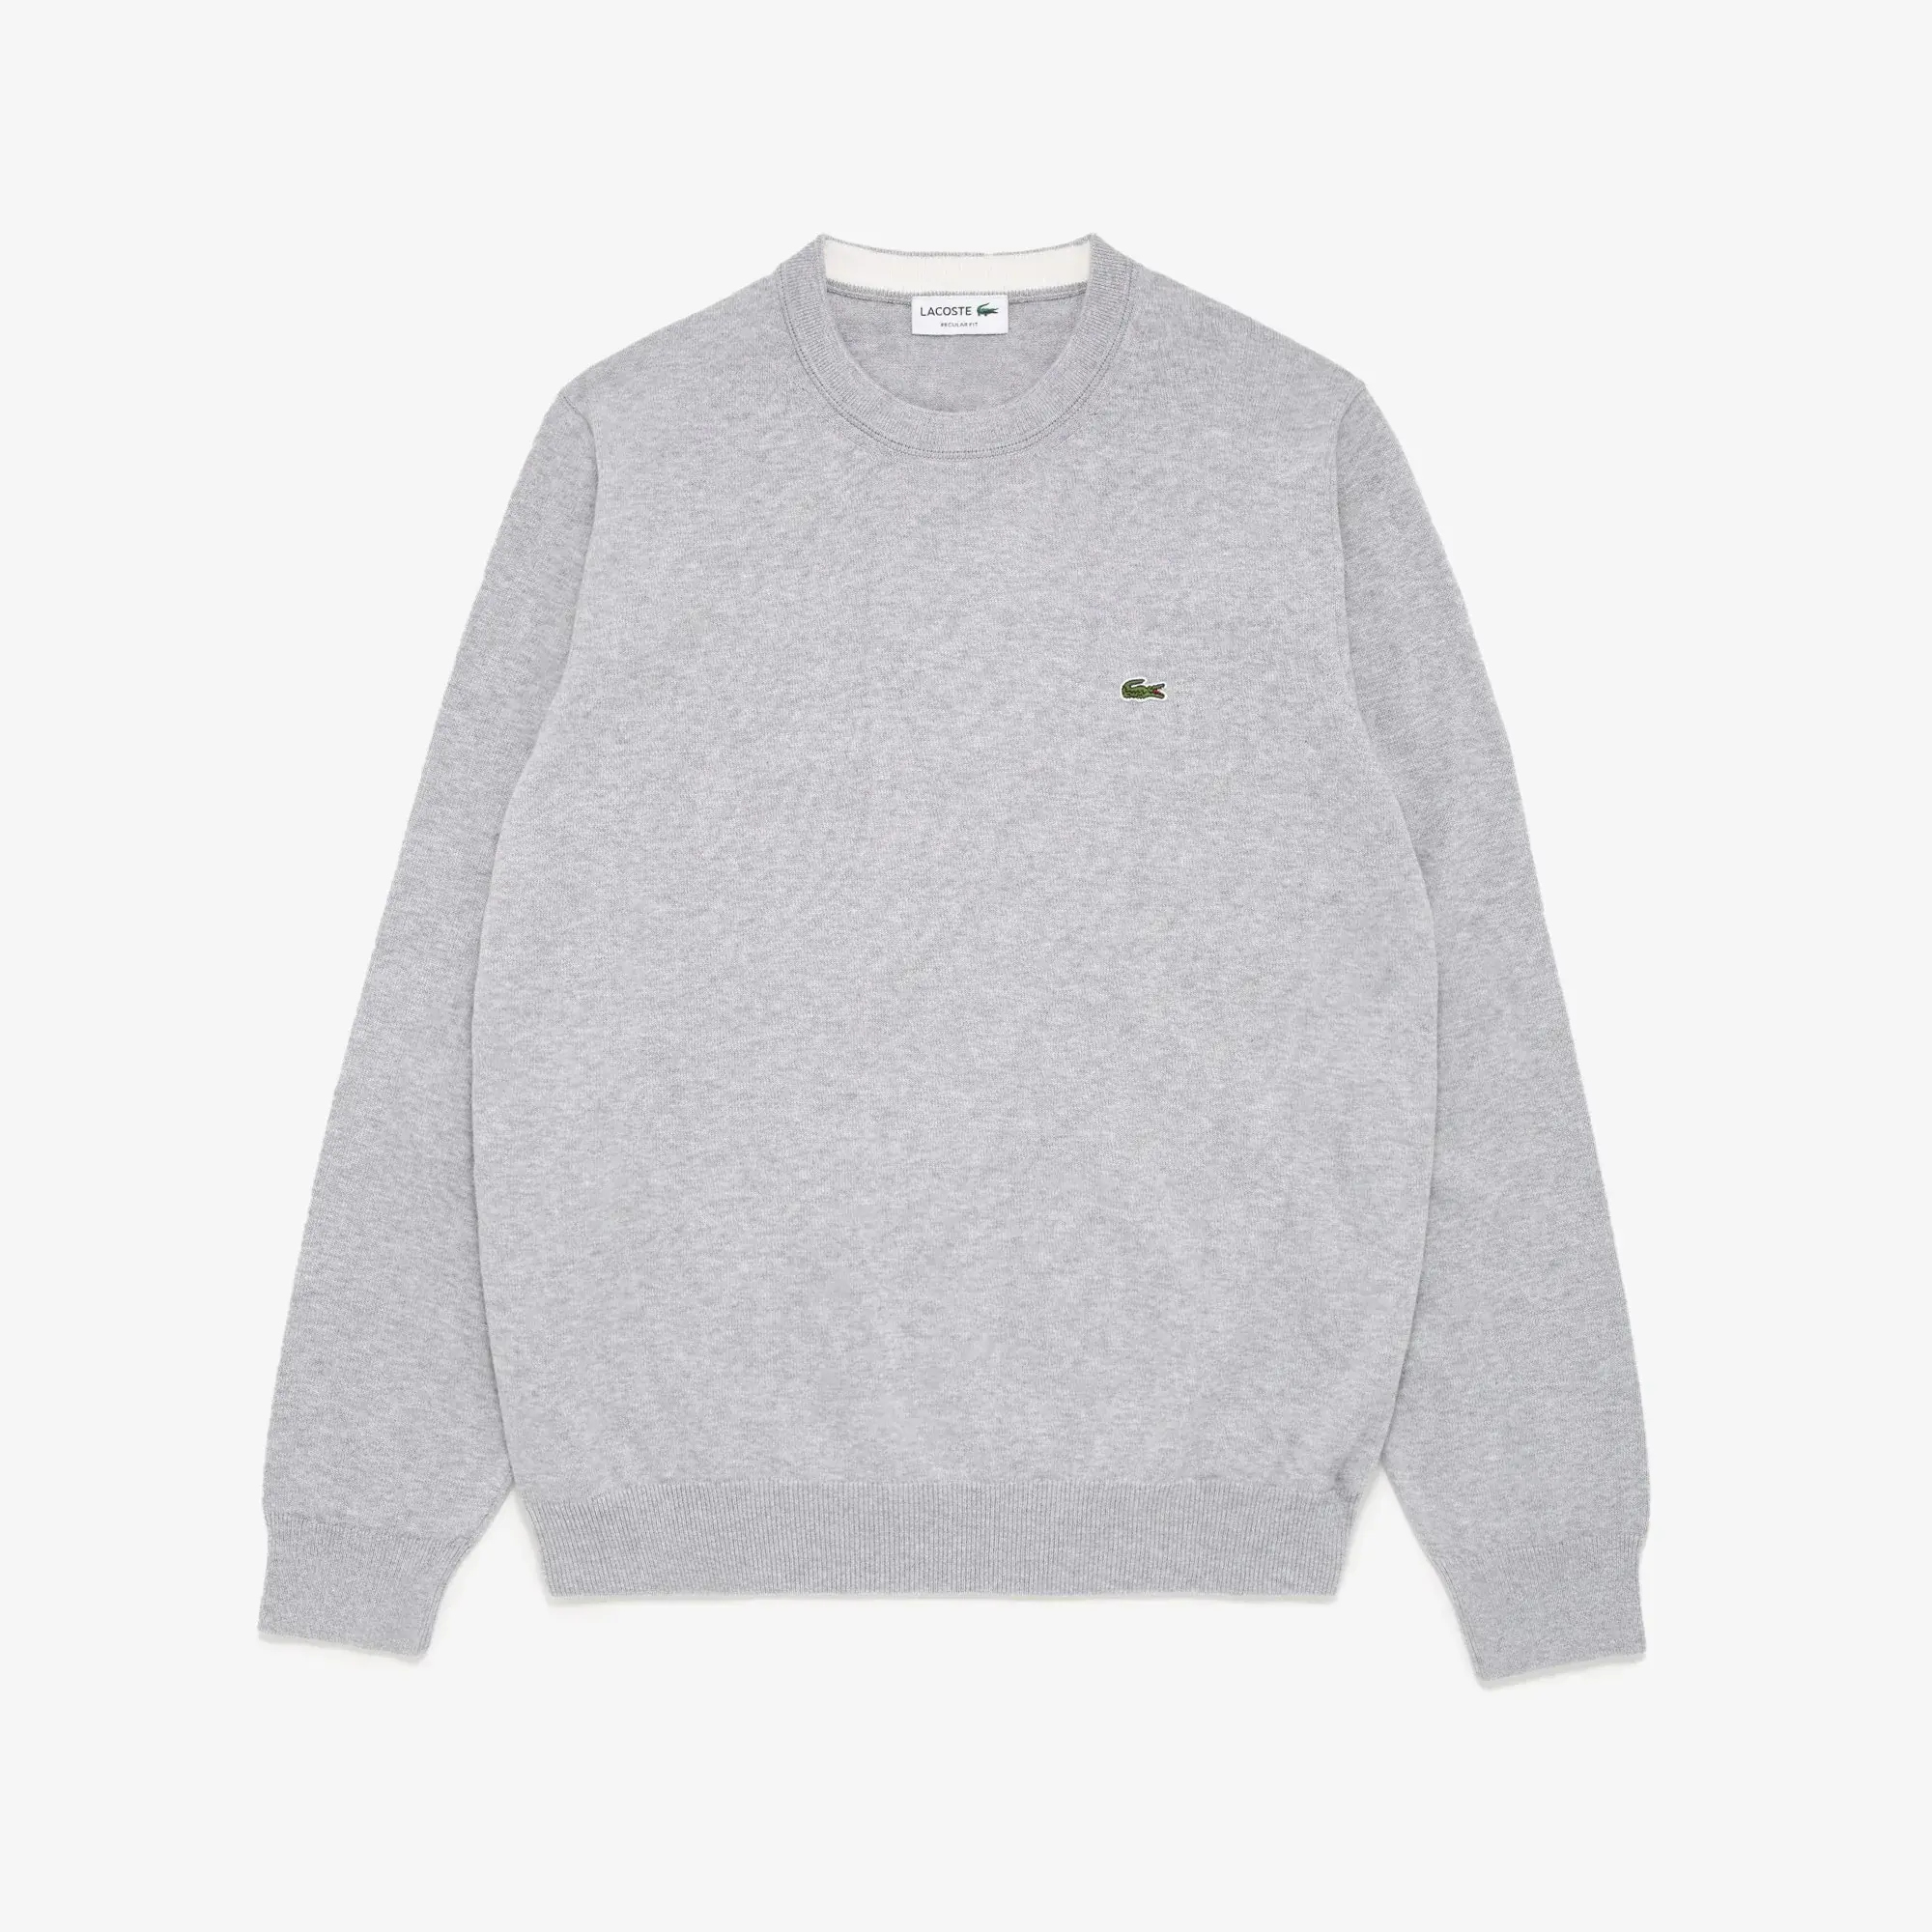 Lacoste Men’s Crew Neck Cotton Sweater. 1